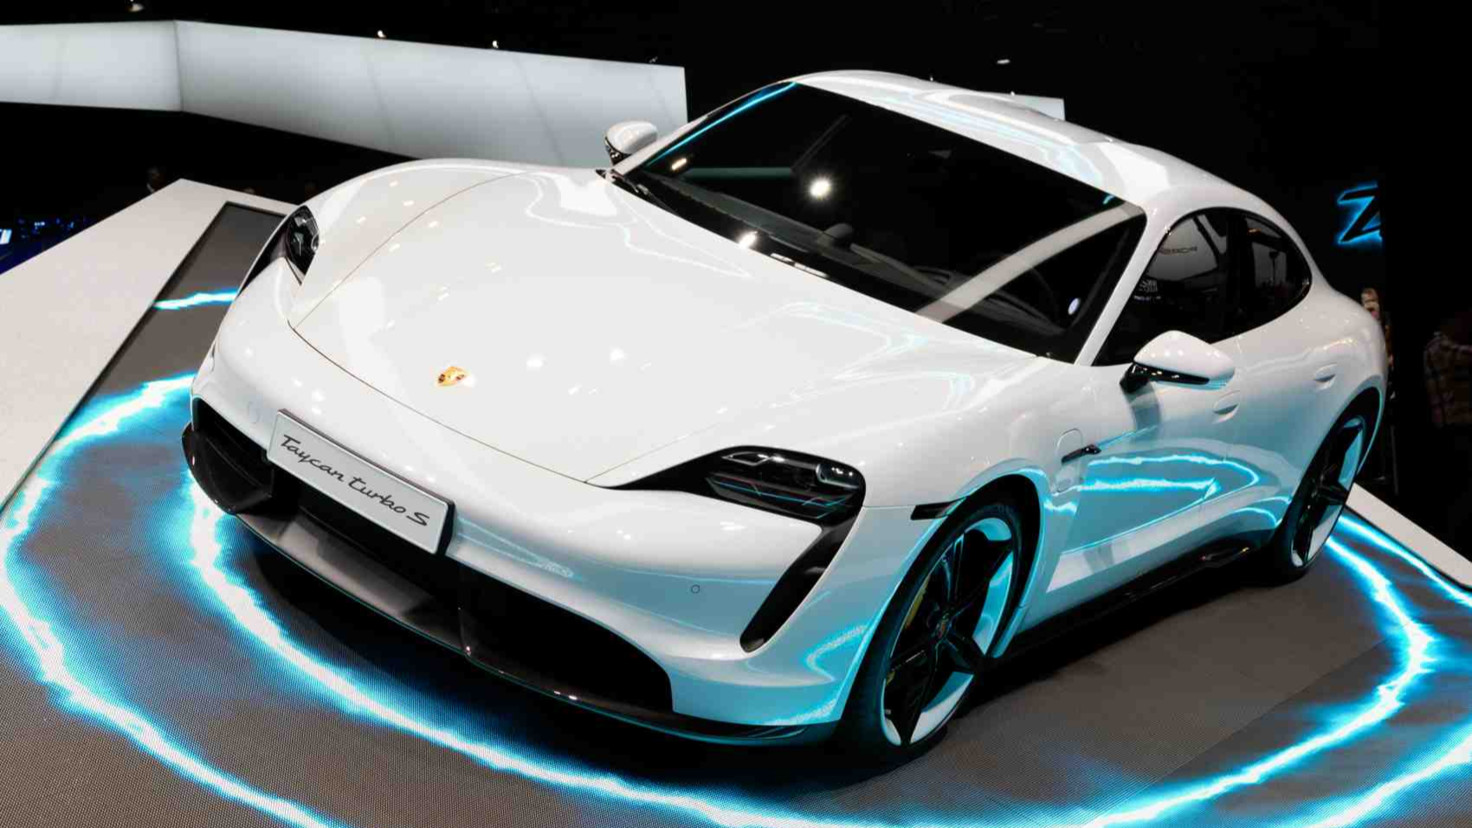 Porsche digitalises car sales in Germany